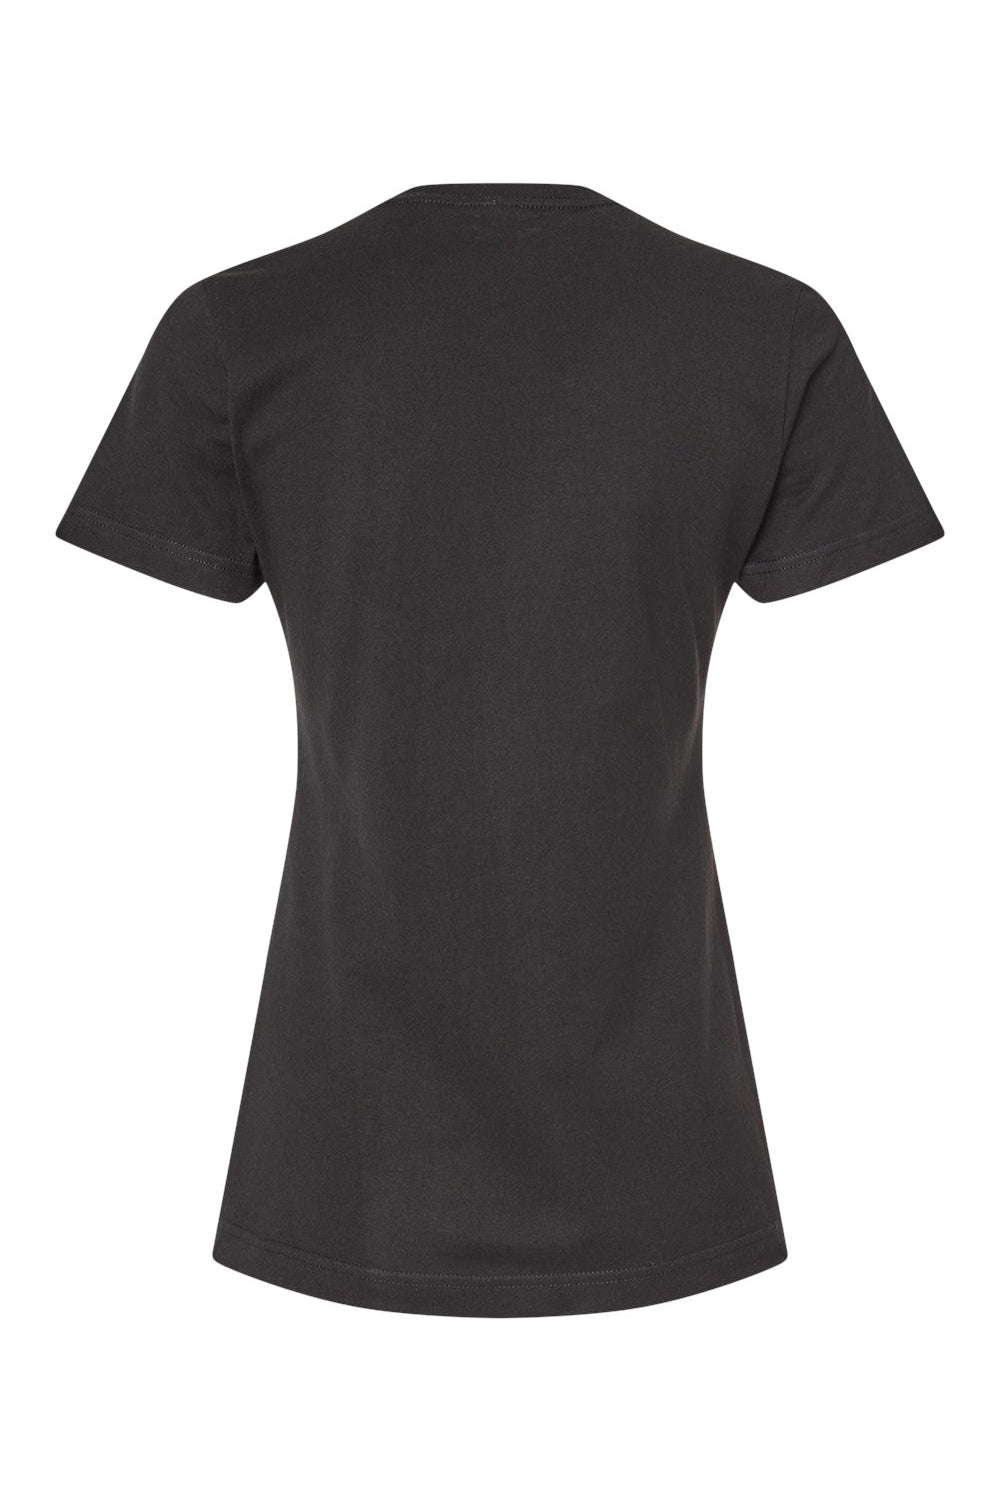 Tultex 216 Womens Fine Jersey Classic Fit Short Sleeve Crewneck T-Shirt Black Flat Back